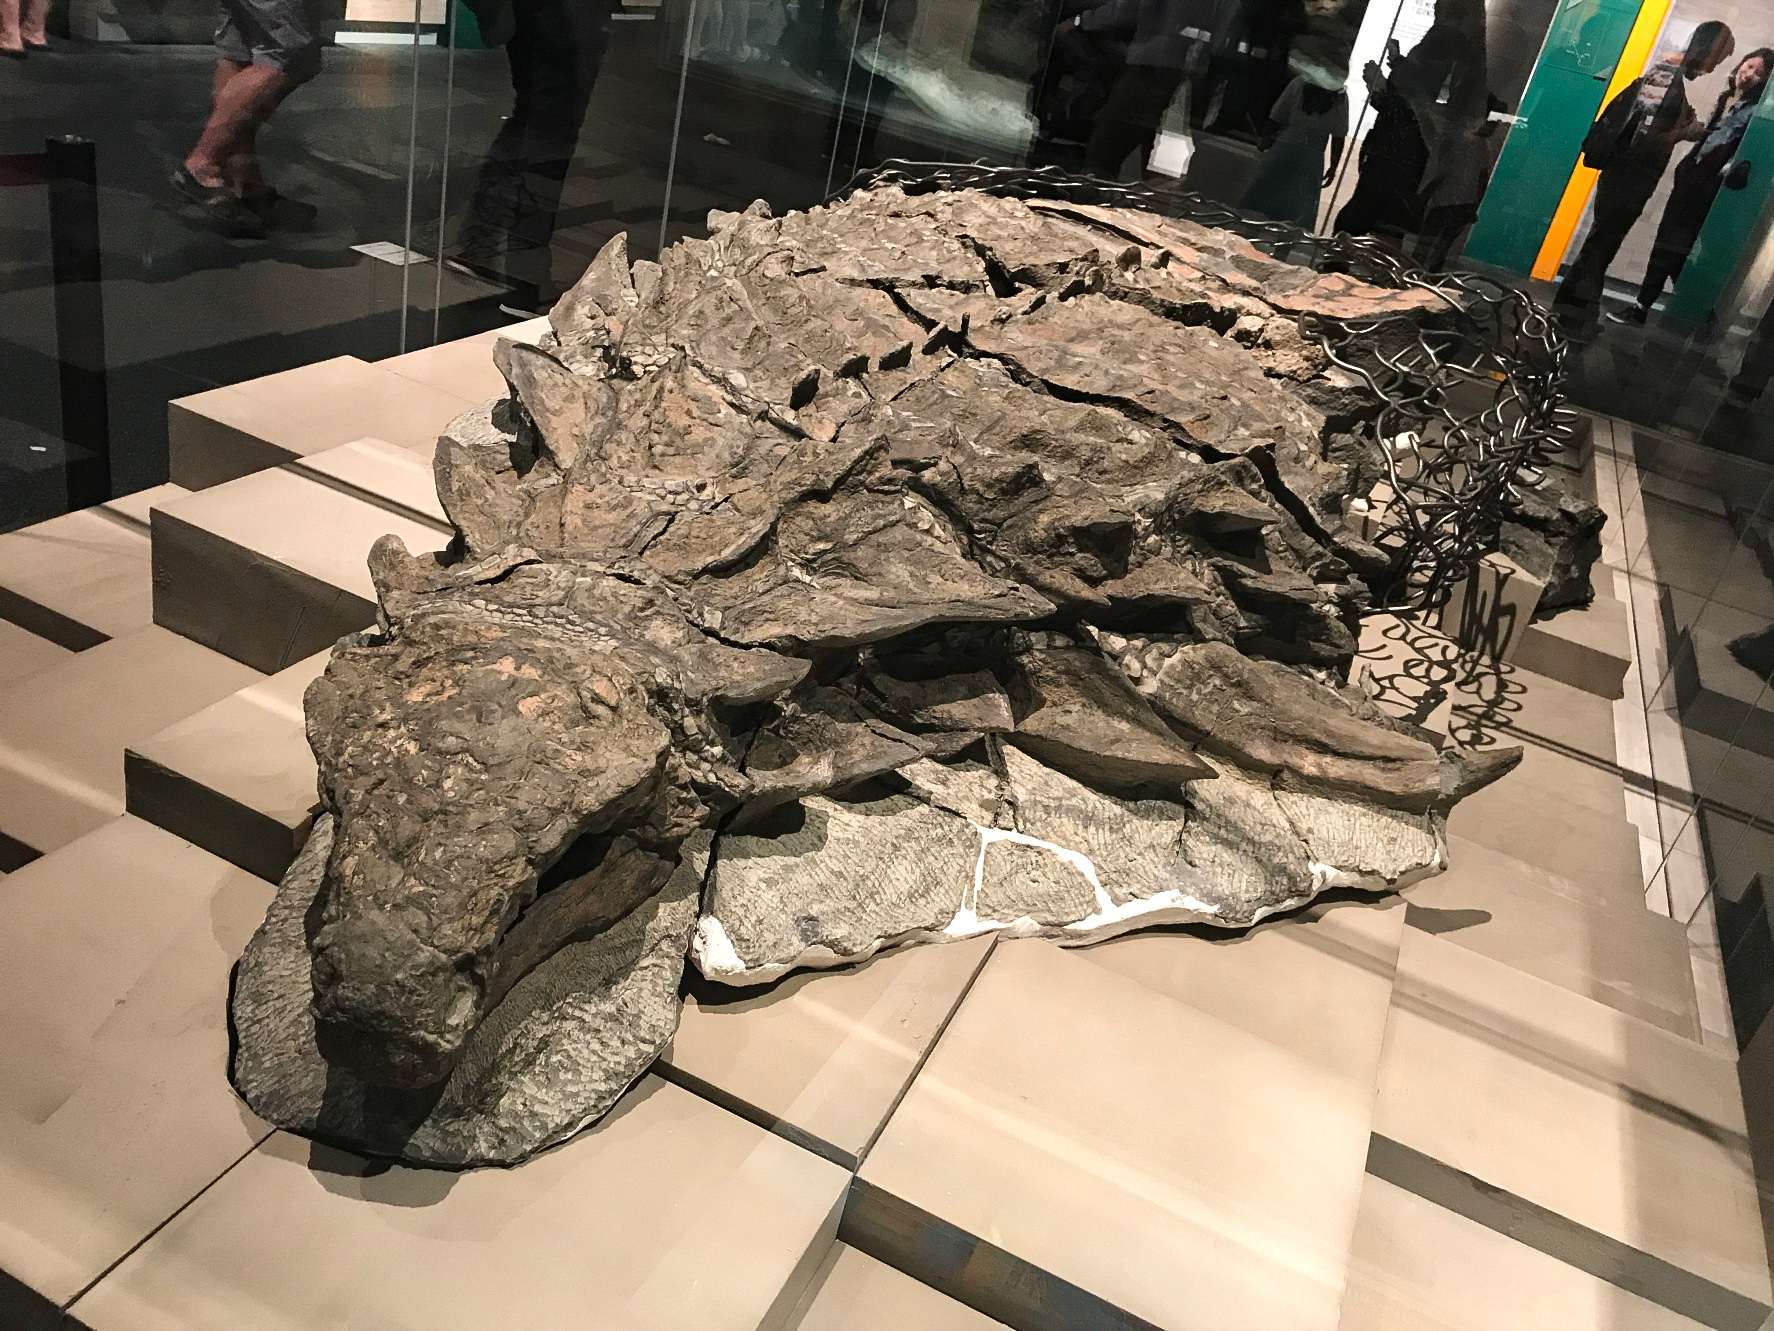 Borealopelta (به معنی سپر شمالی) یک سرده از آنکیلوسورهای نودوسورید از کرتاسه اولیه آلبرتا، کانادا است. این شامل یک گونه واحد به نام B. markmitchelli است که در سال 2017 توسط Caleb Brown و همکارانش از یک نمونه به خوبی حفظ شده به نام Suncor nodosaur نامگذاری شد.